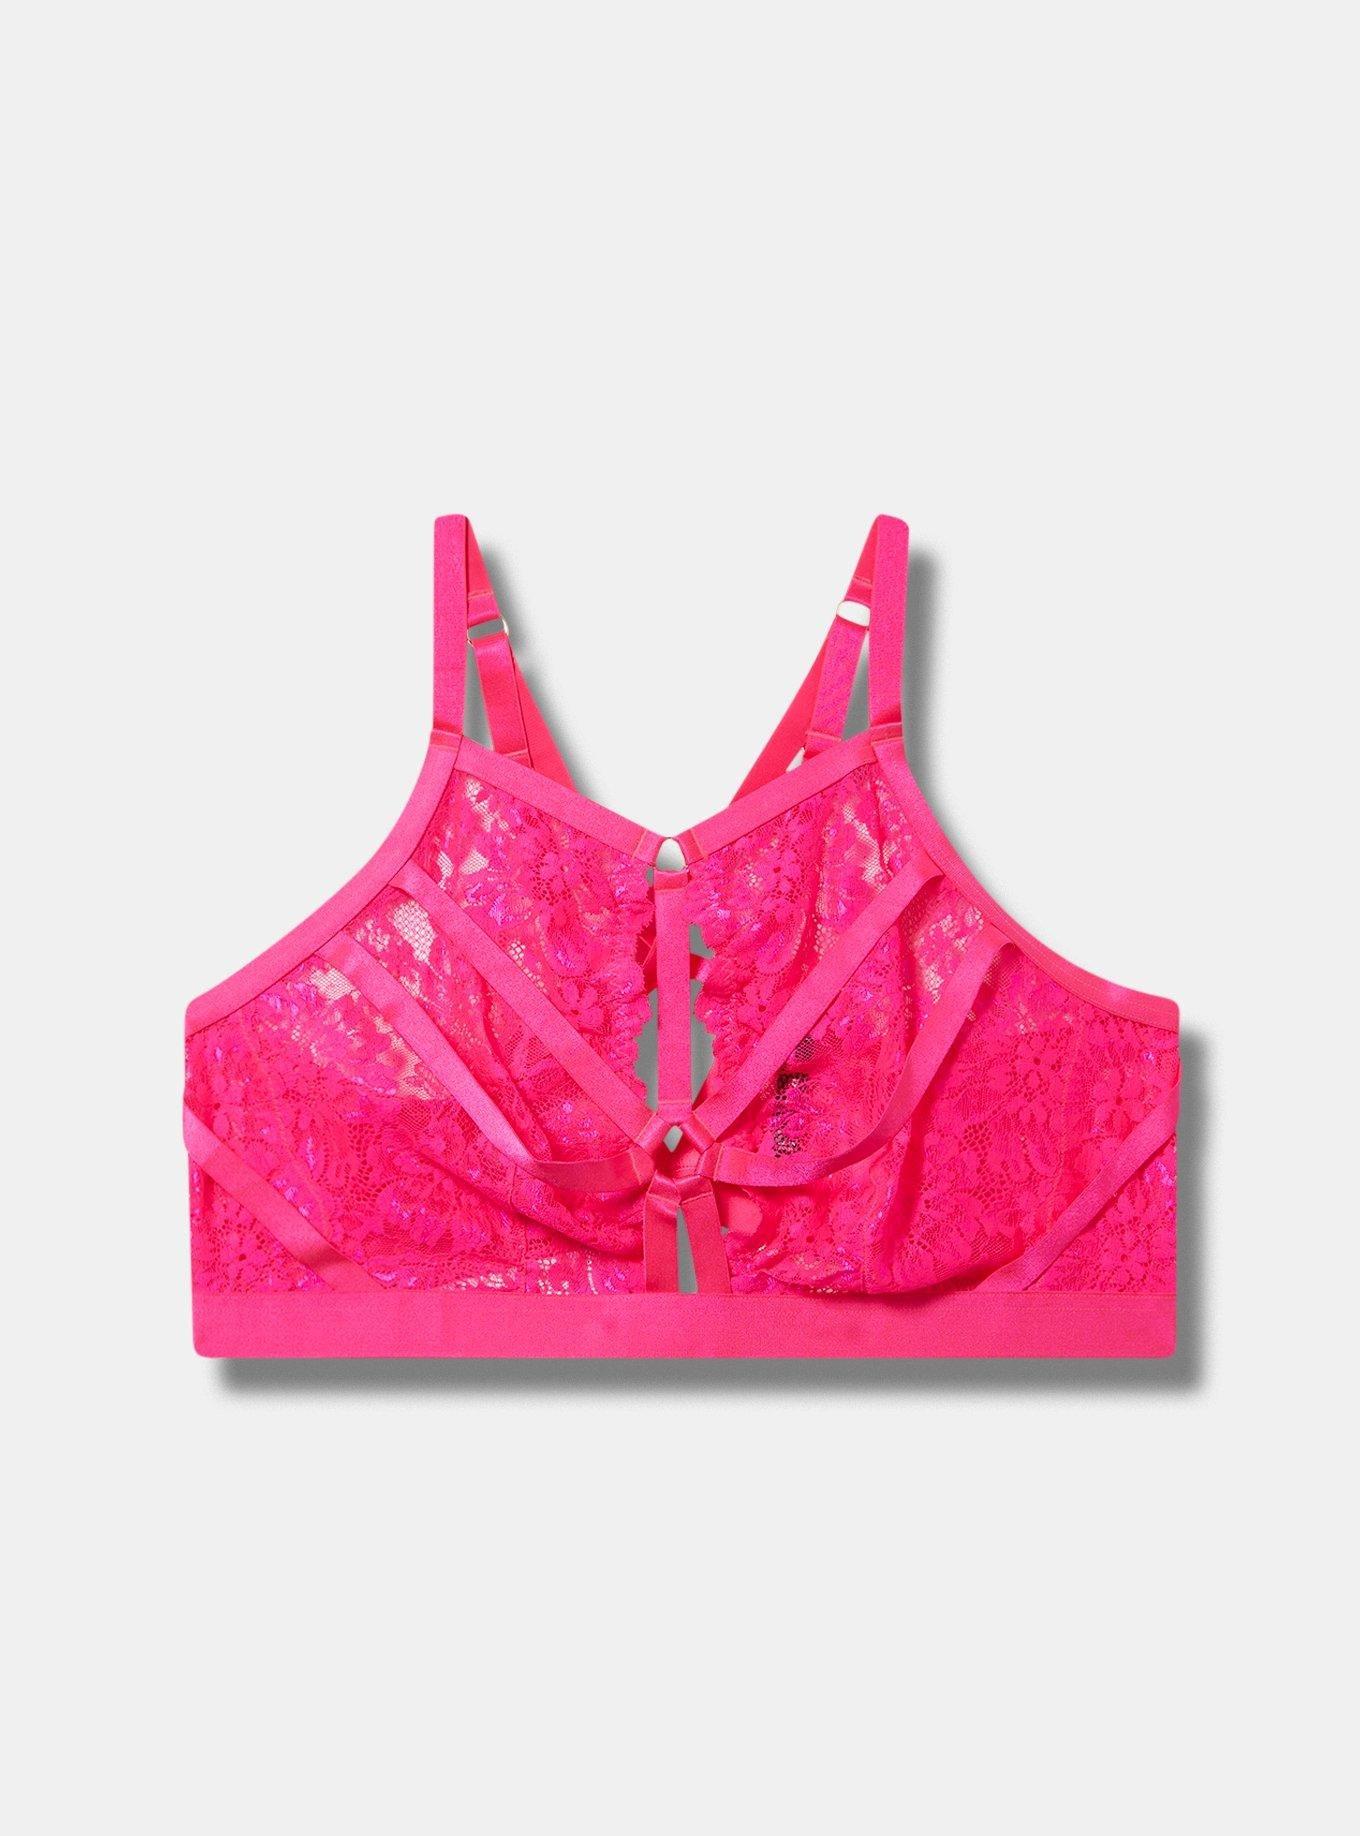 Victoria's Secret Bra Pink Size 4 - $10 (87% Off Retail) - From